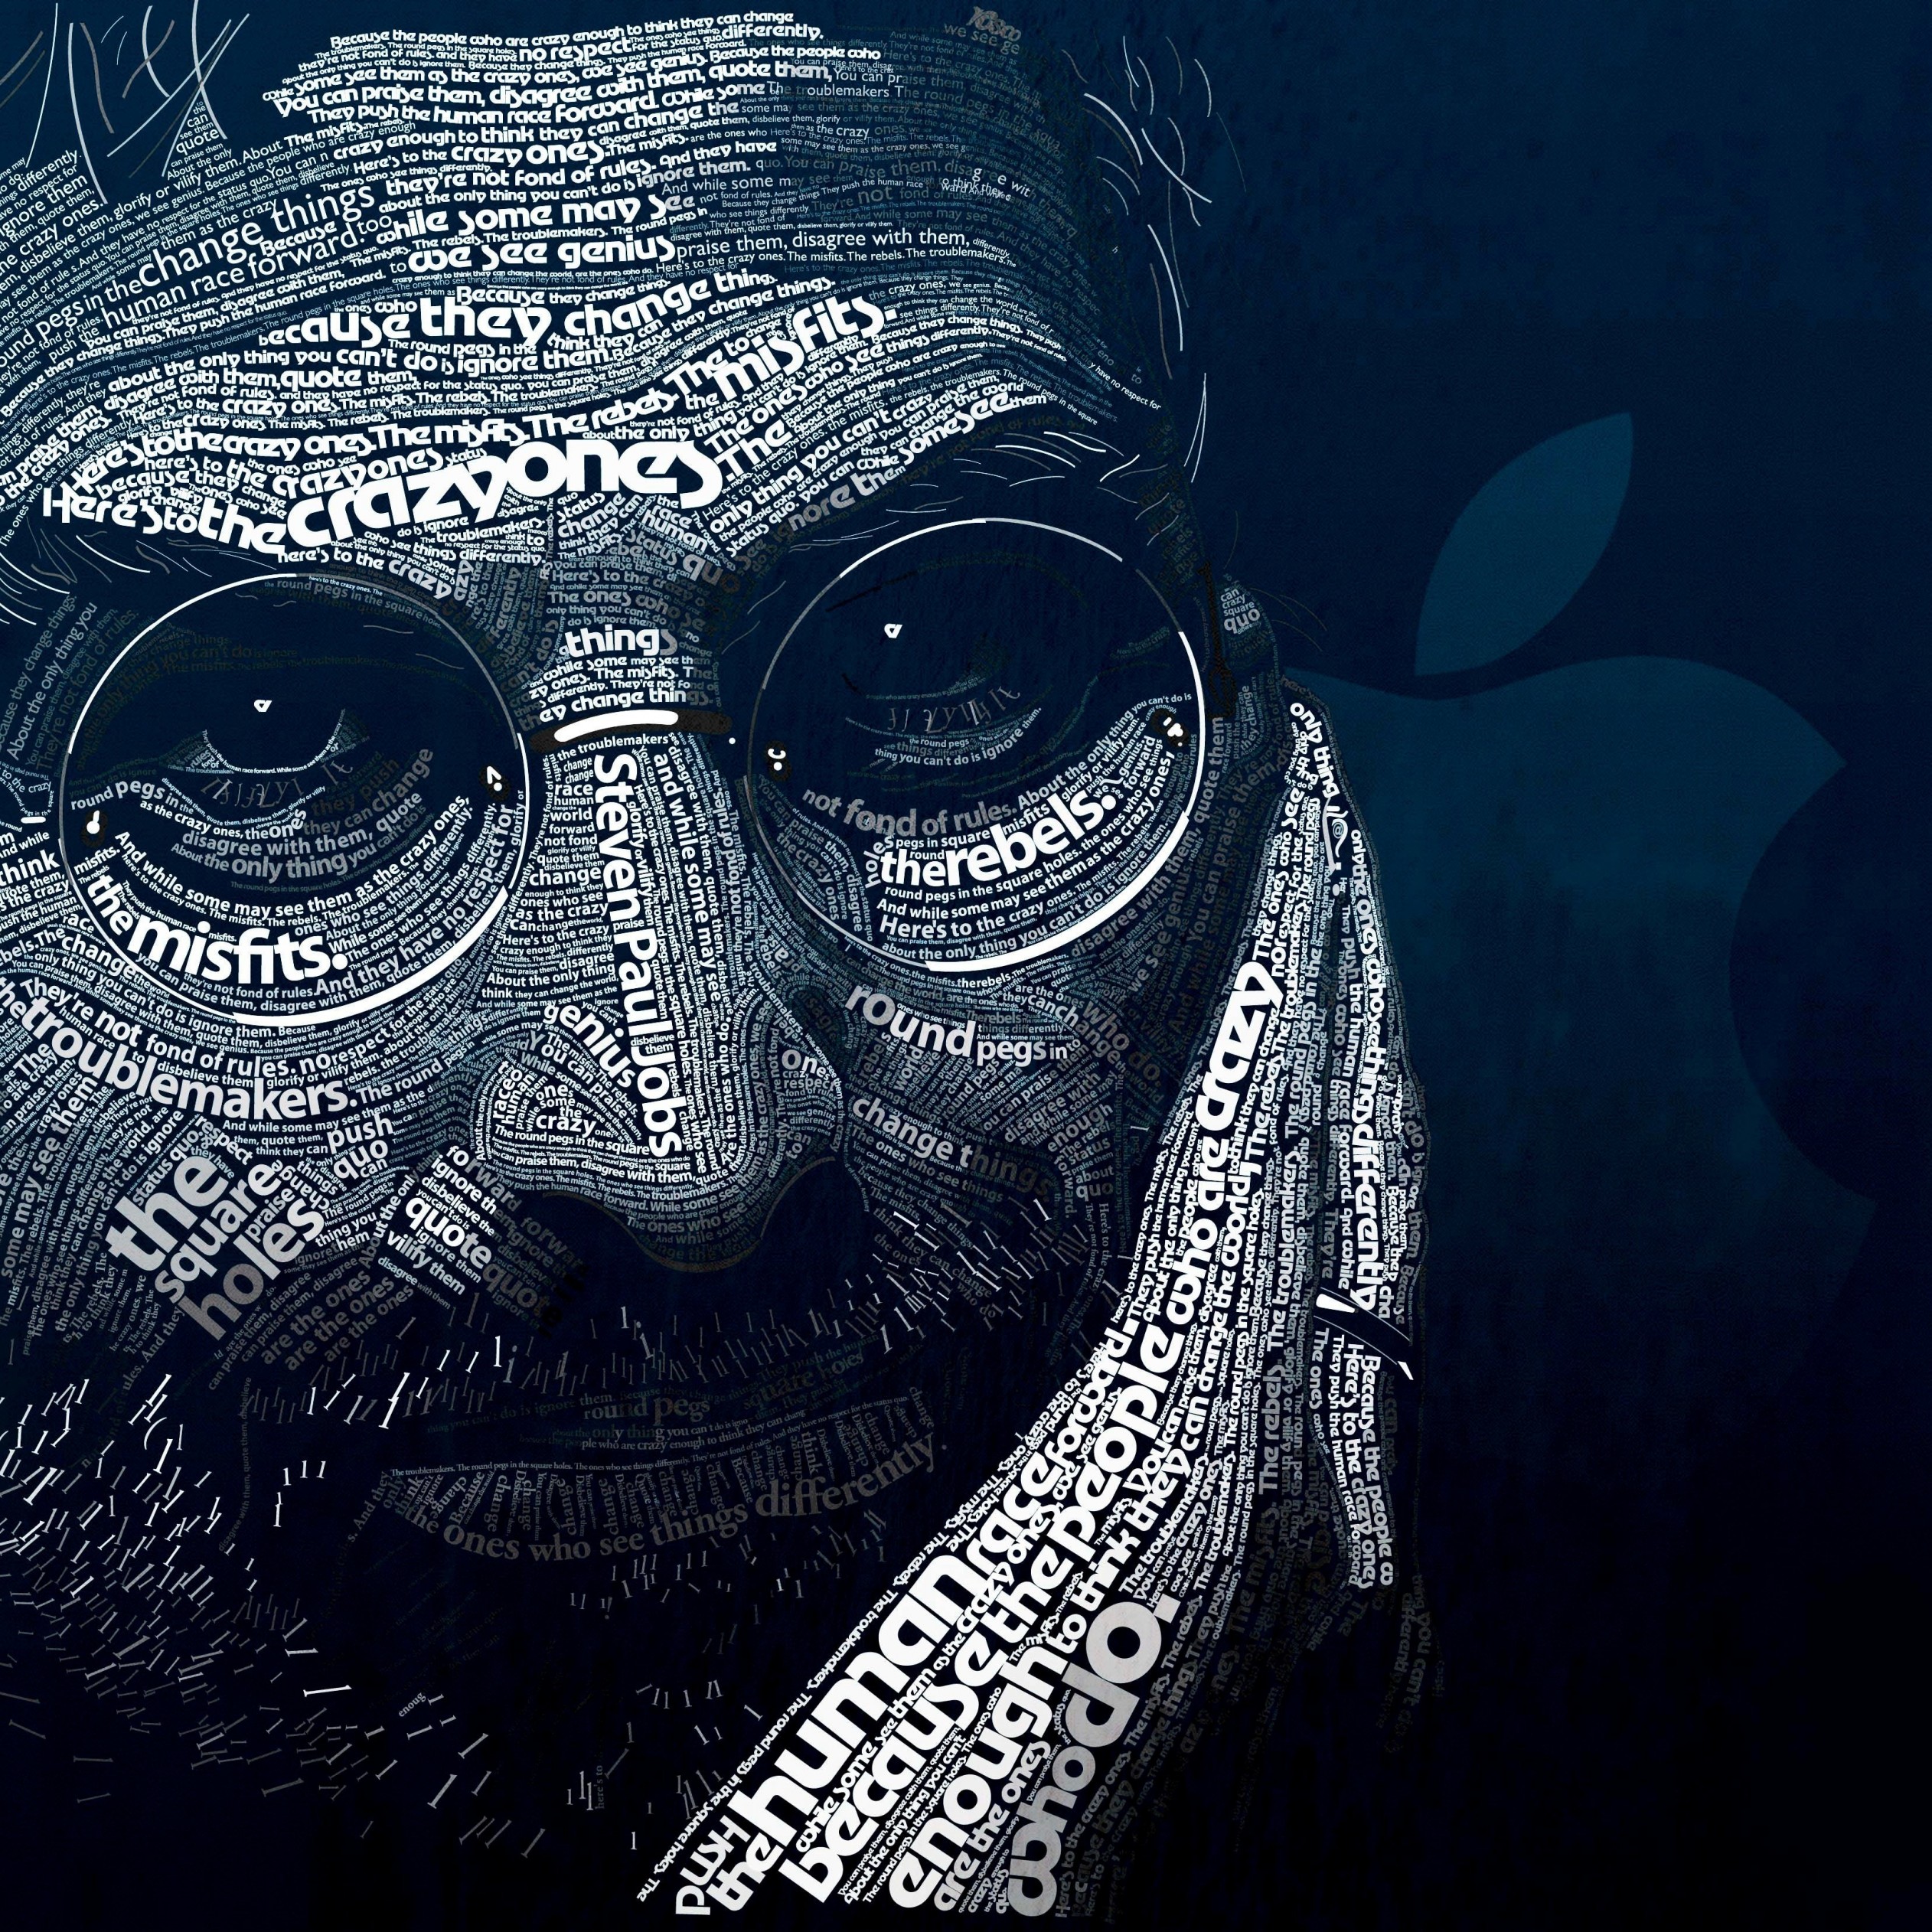 Steve Jobs Typographic Portrait Wallpaper for Apple iPad 3